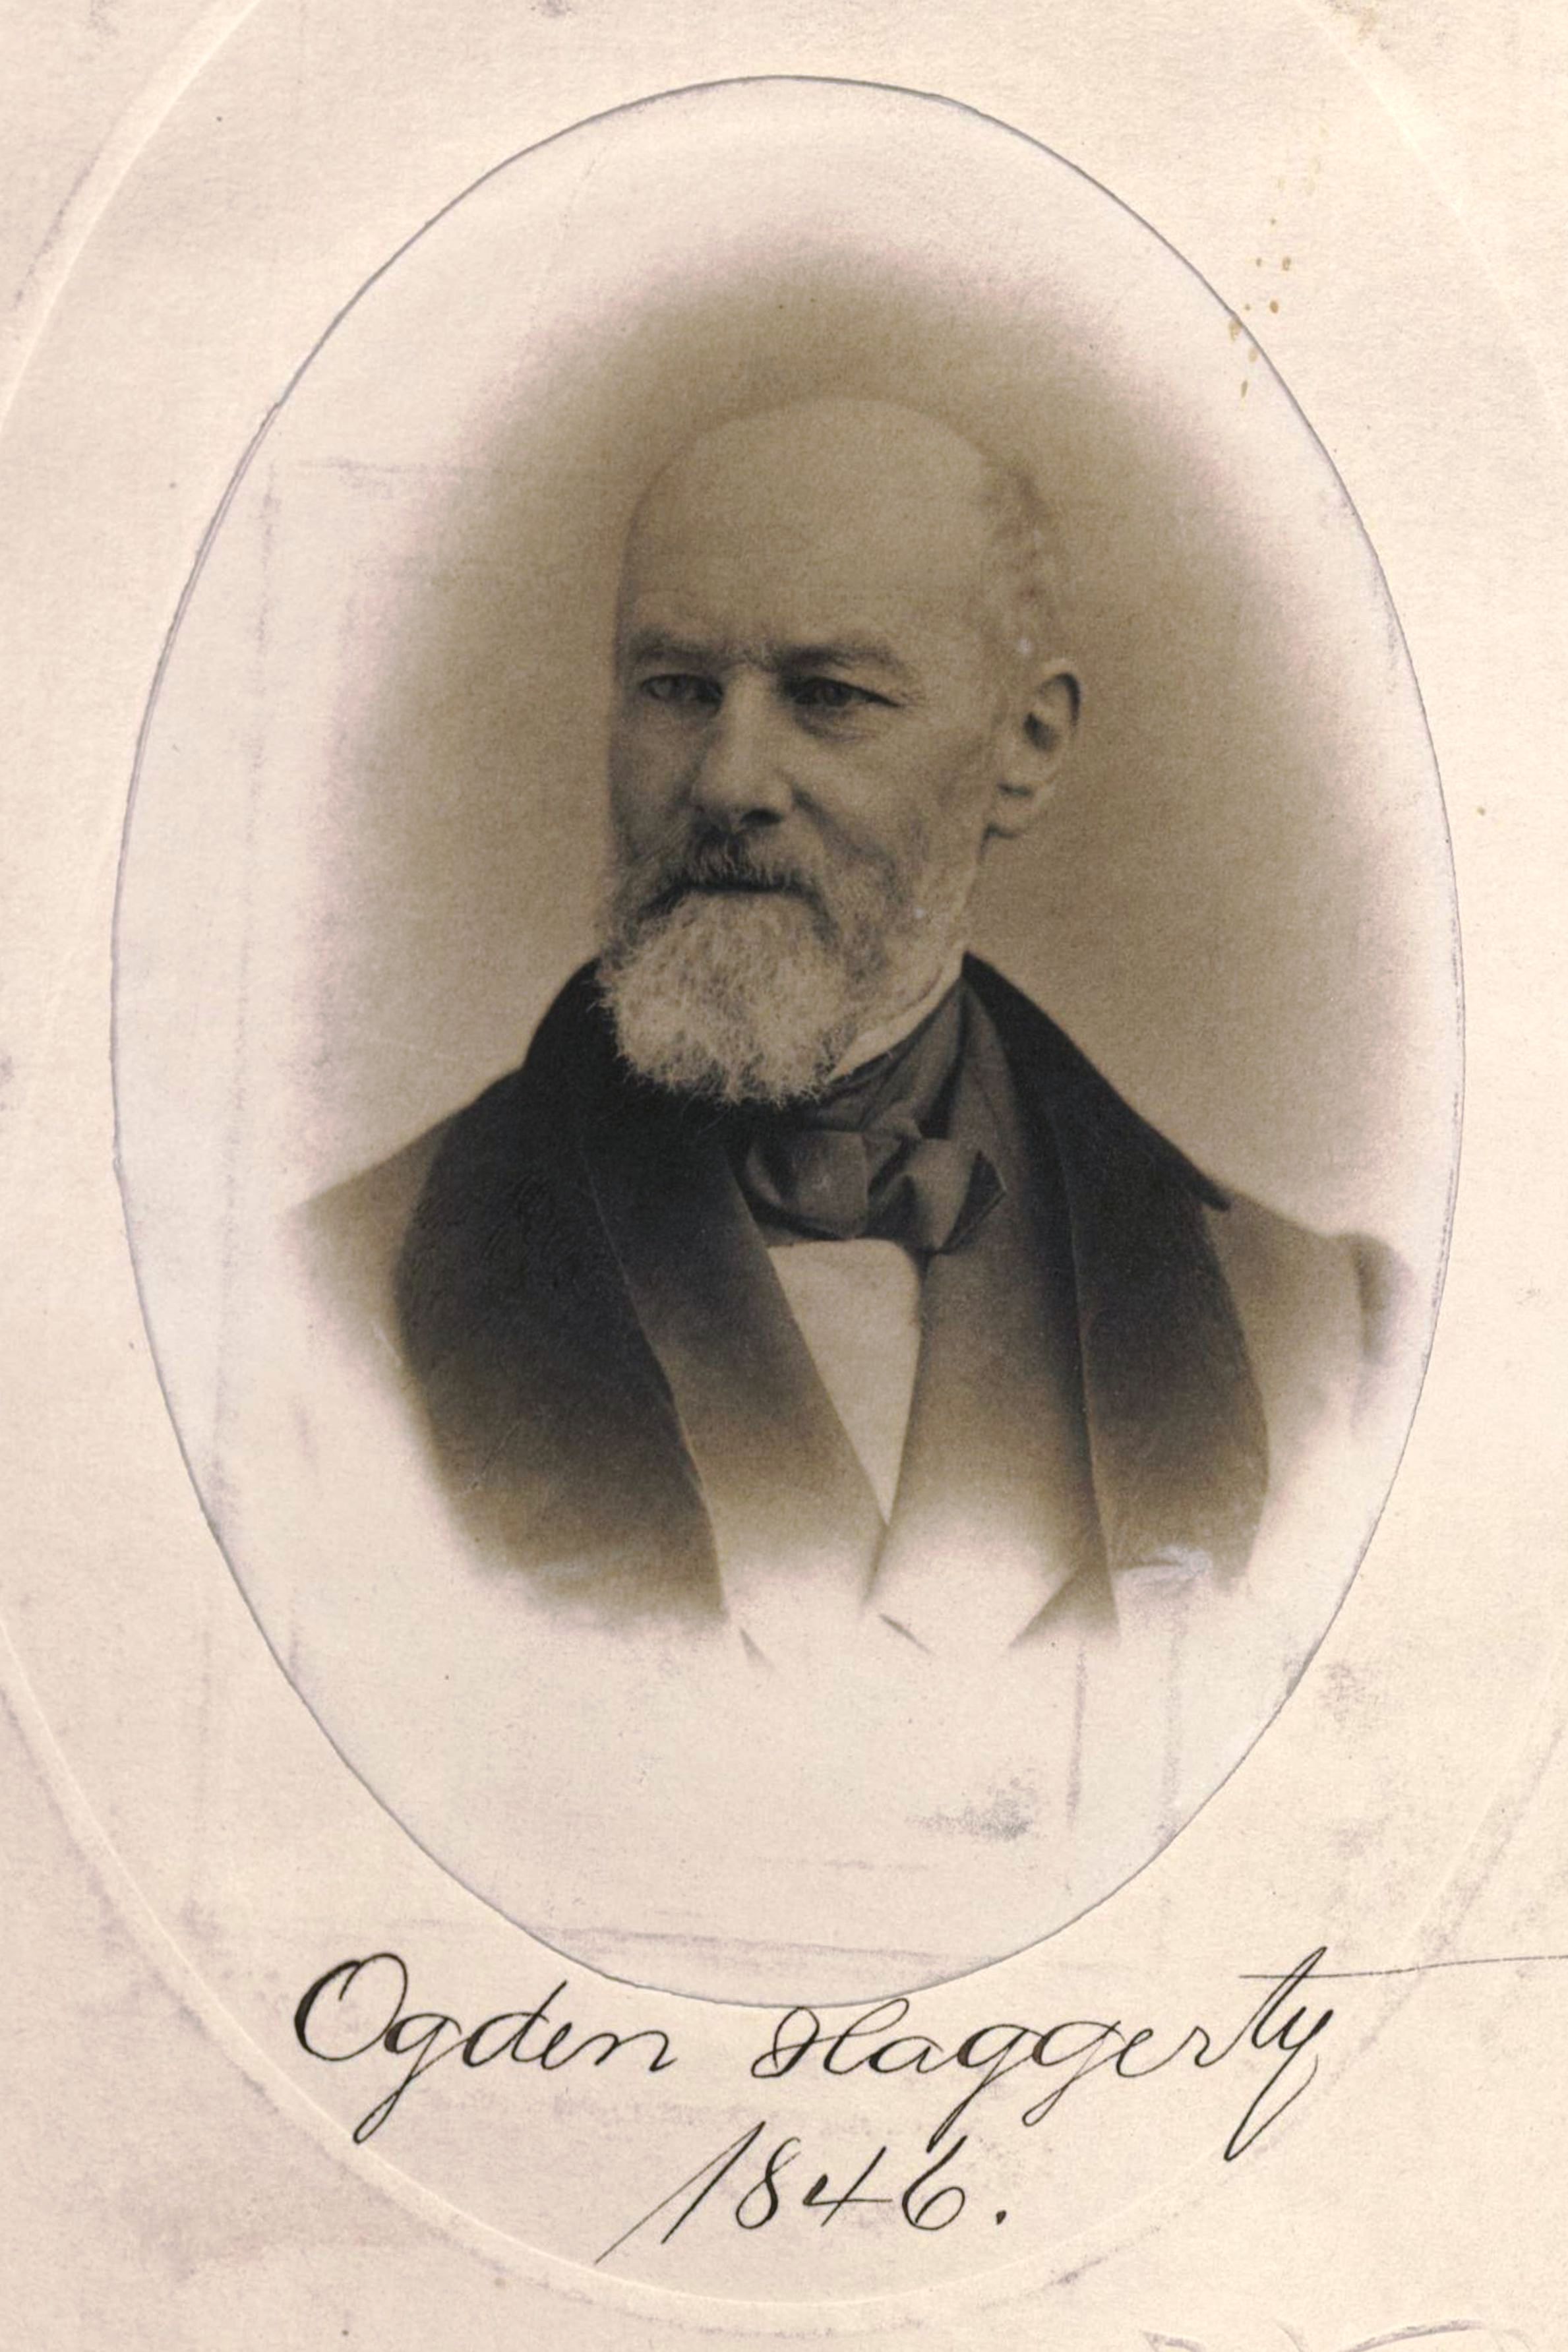 Member portrait of Ogden Haggerty